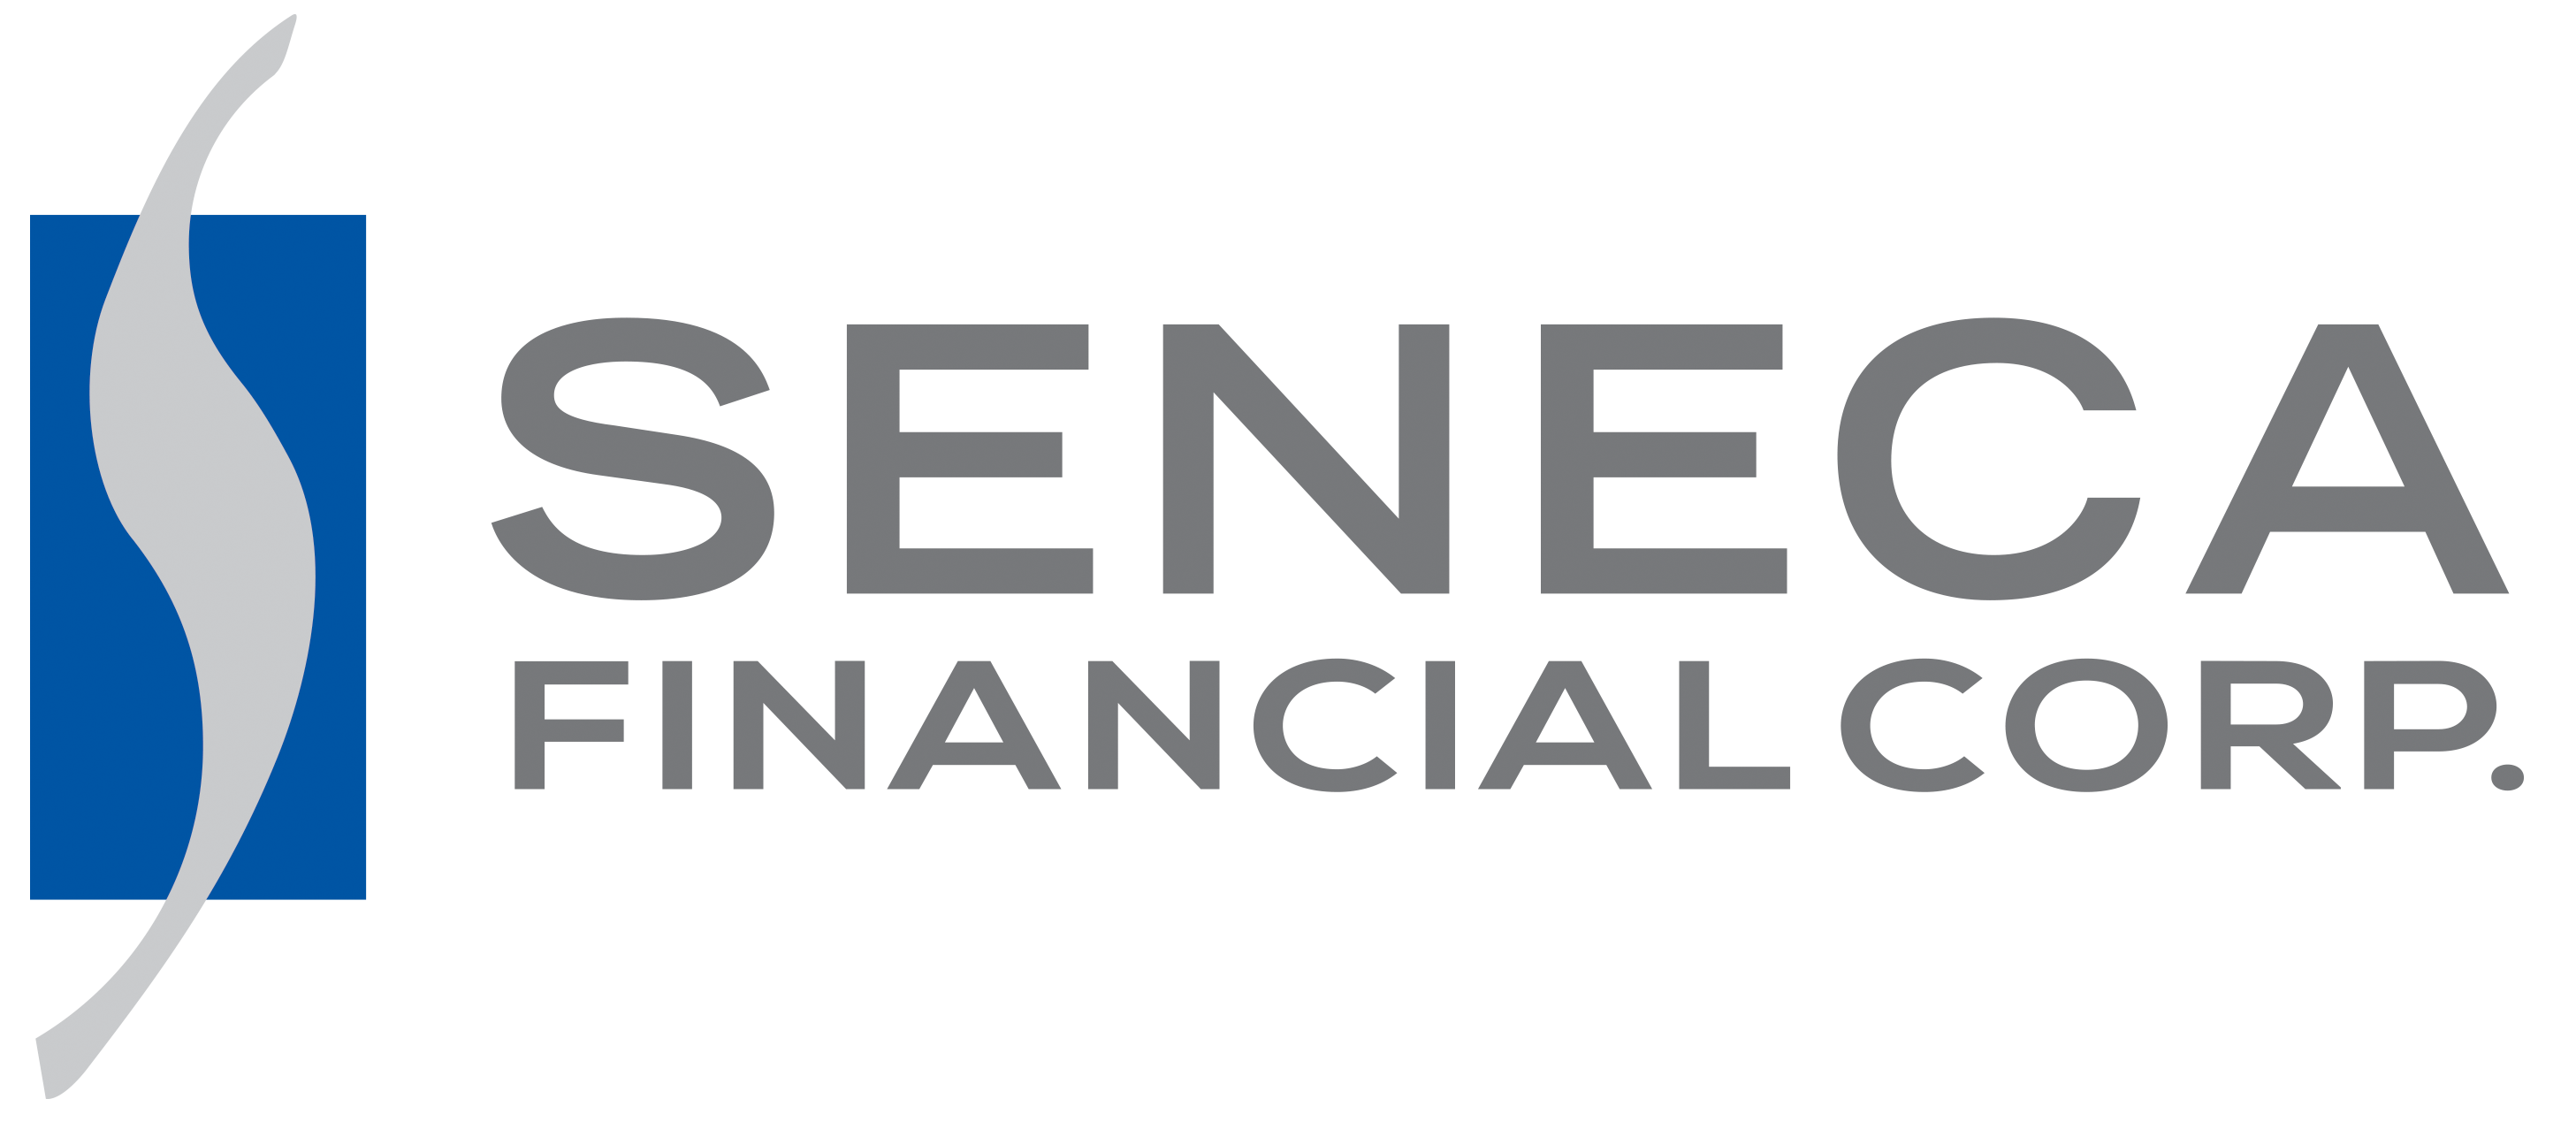 Seneca Financial Corp.